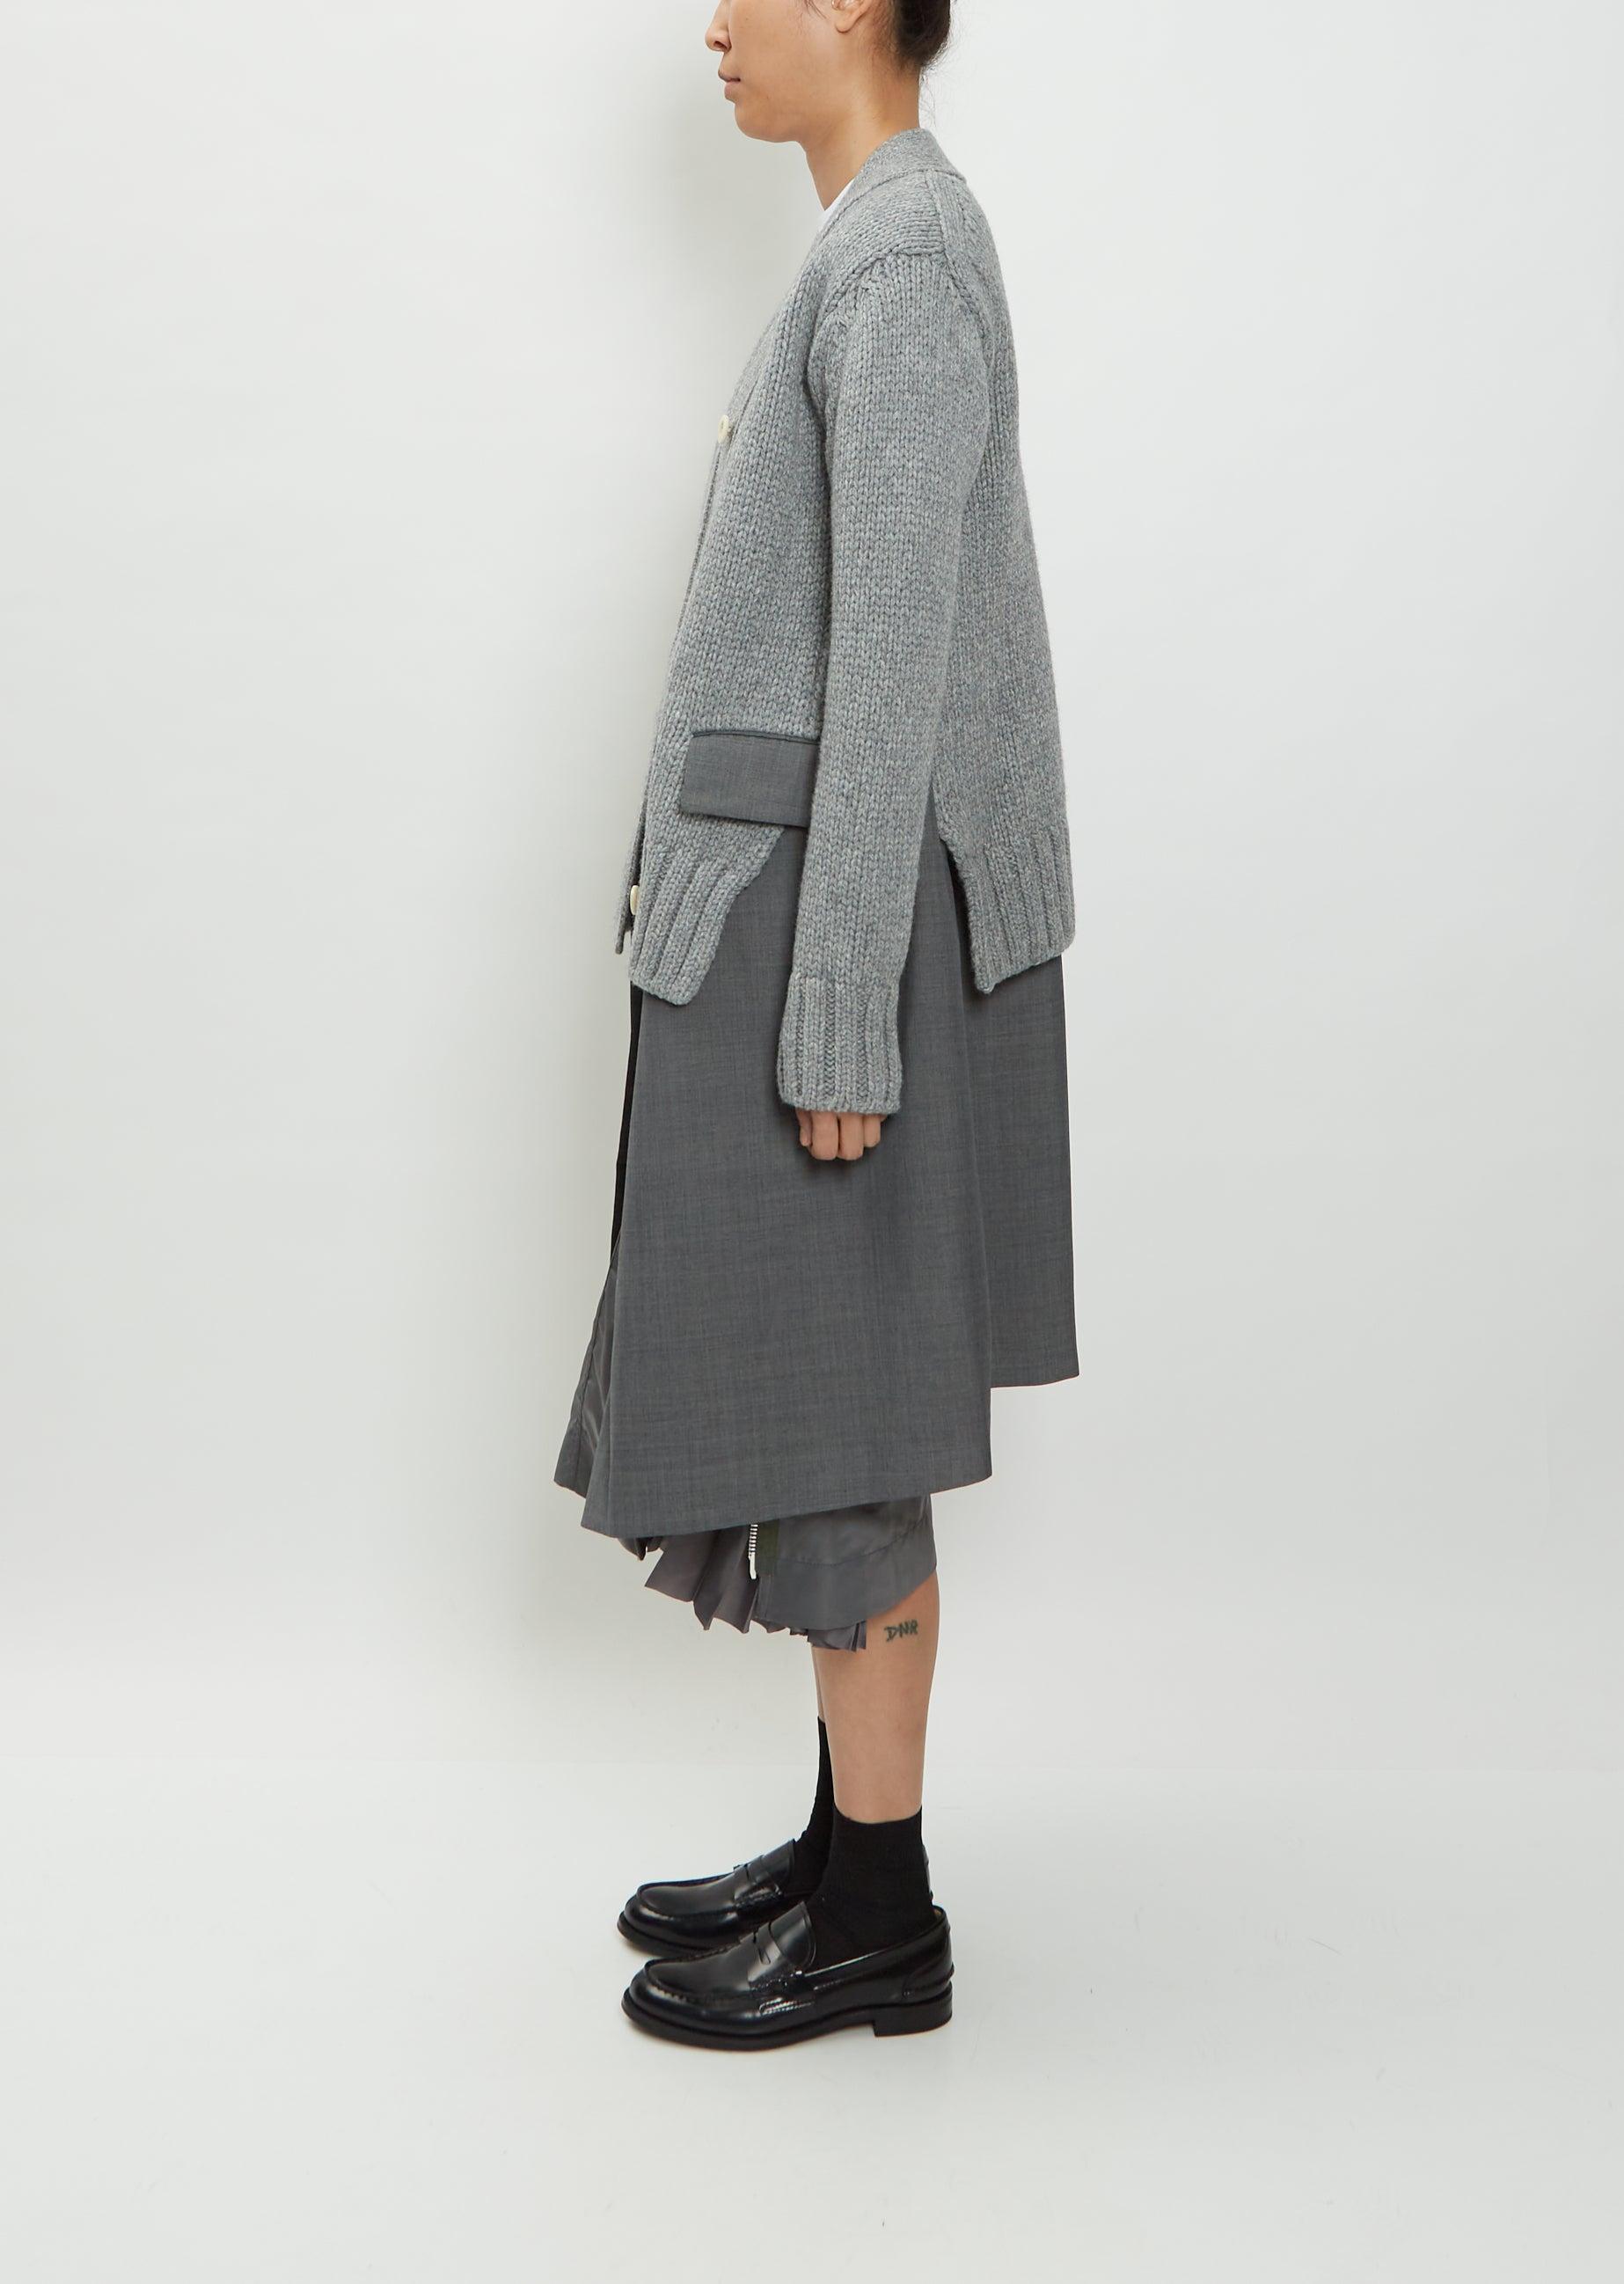 Sacai Women's Gray Wool Suiting X Knit Cardigan